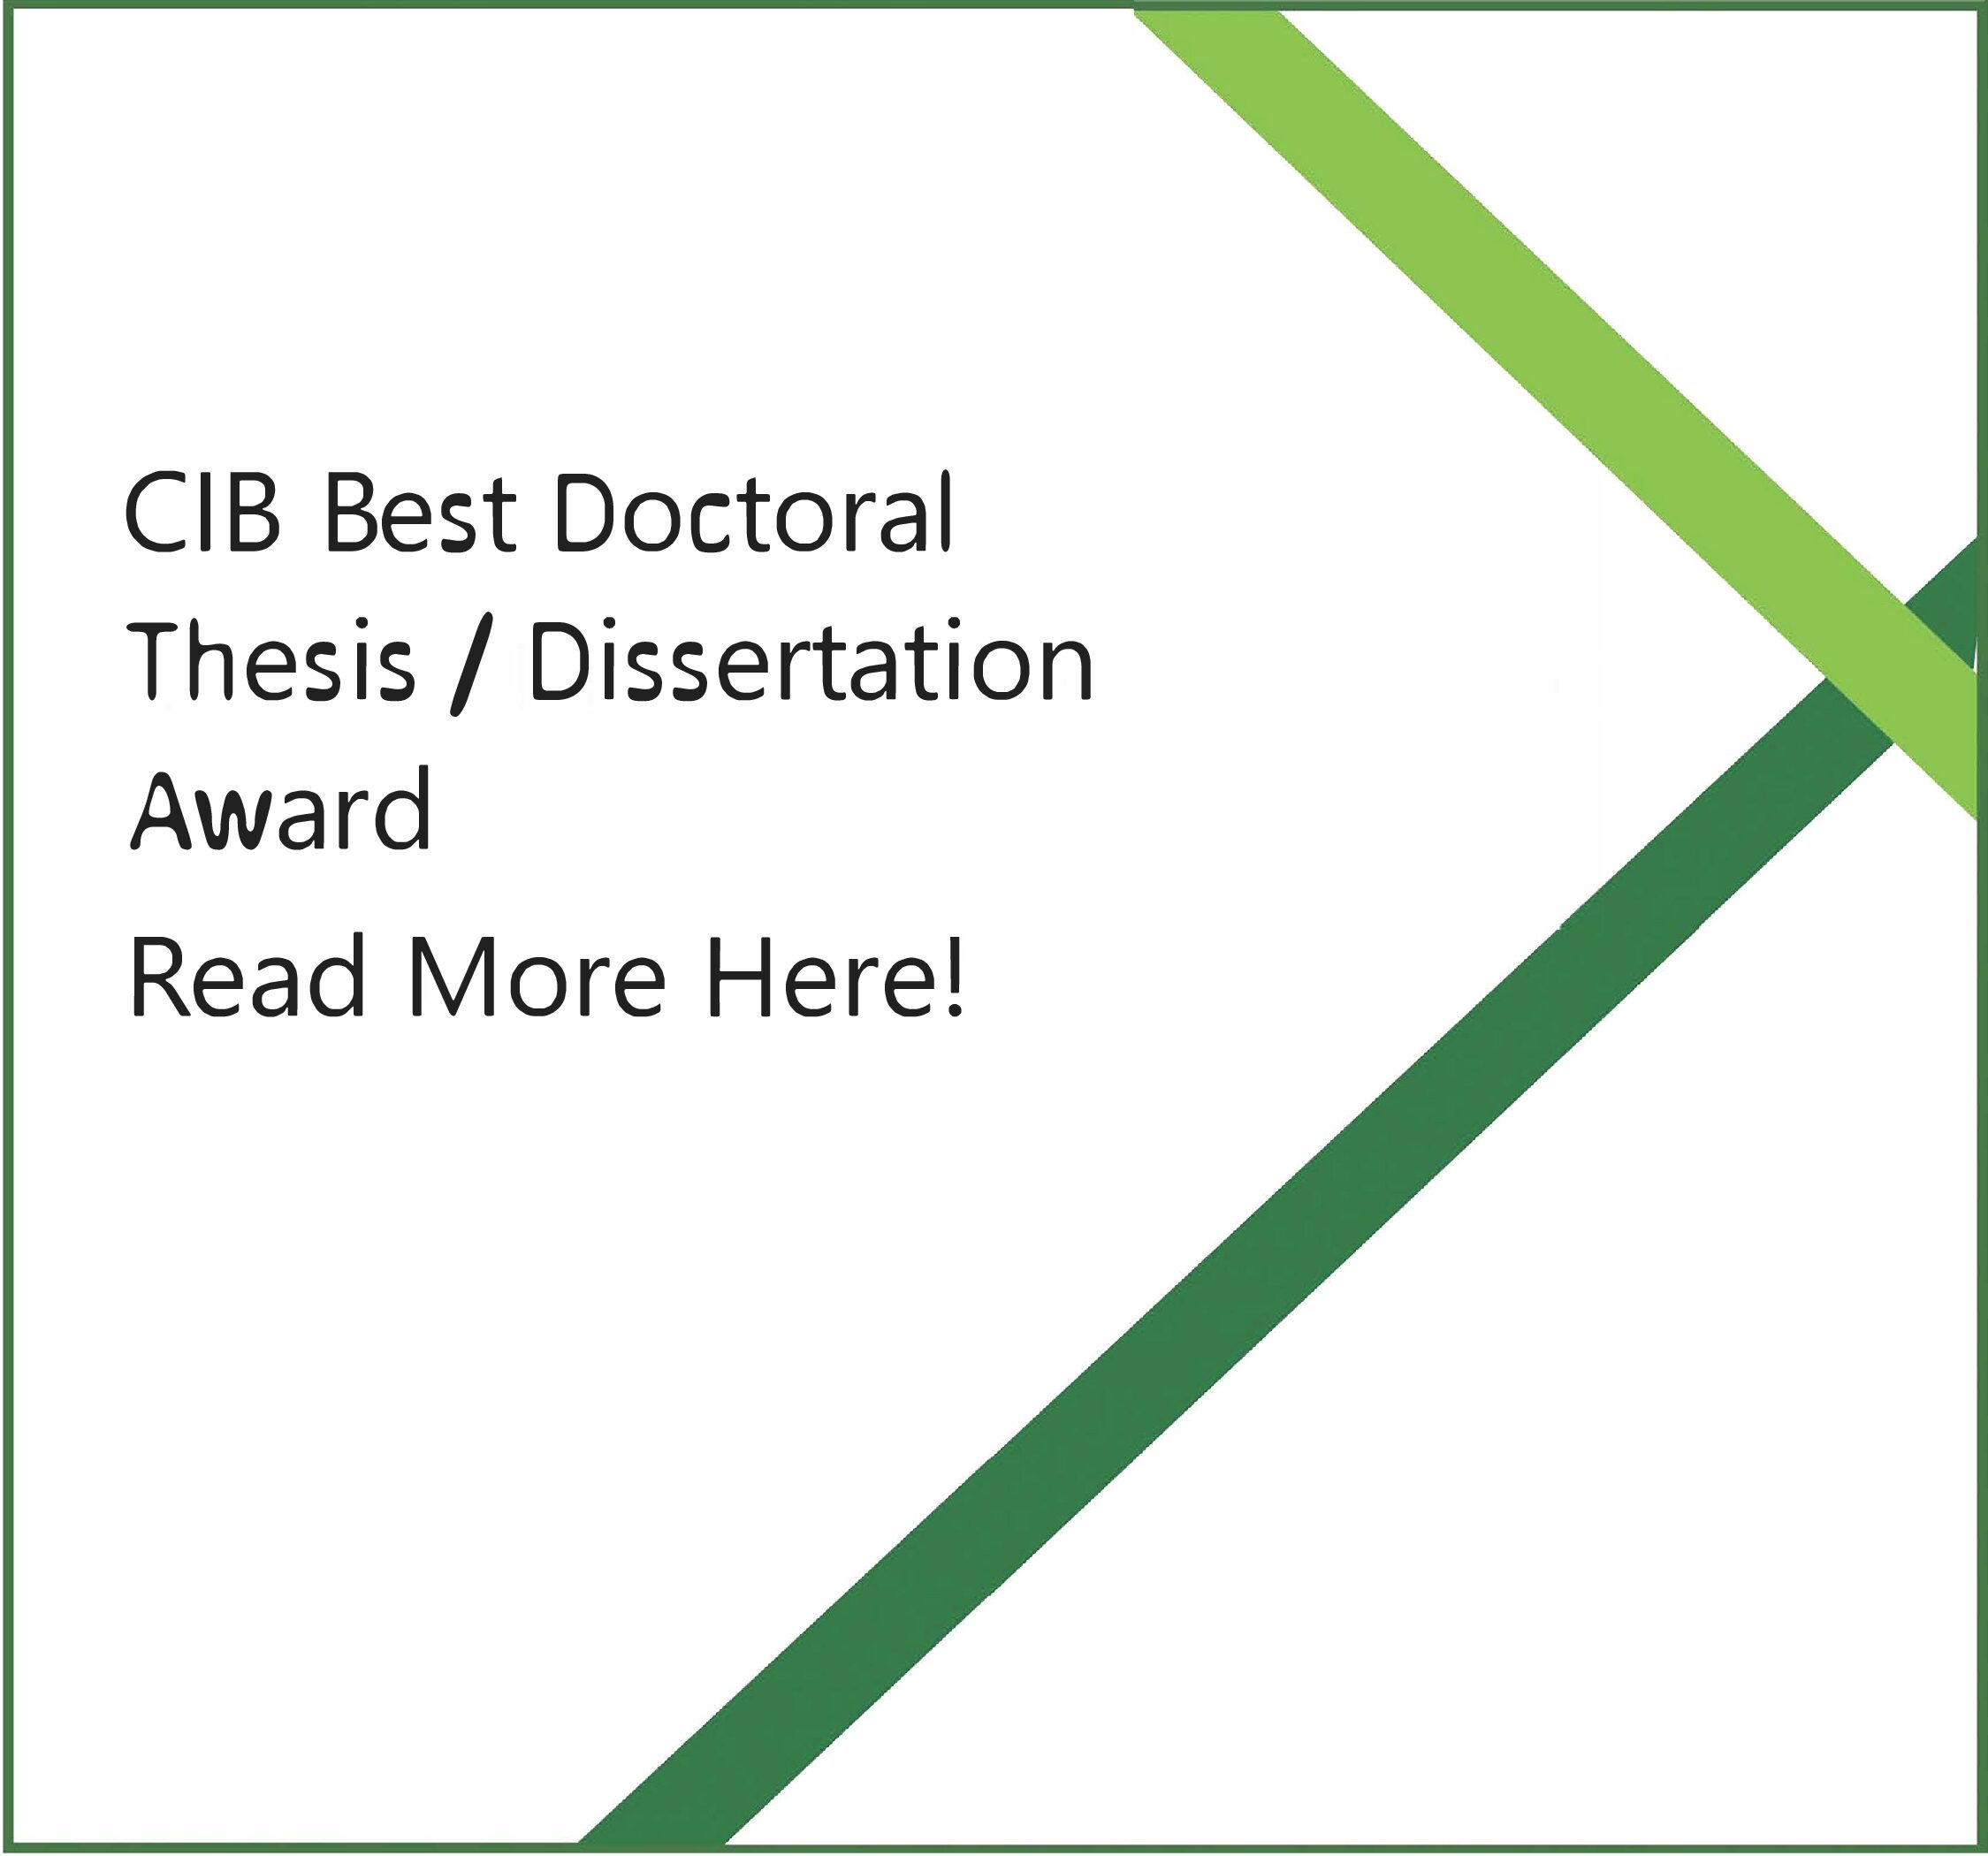 CIB Best Doctoral Thesis/Dissertation Award 2021